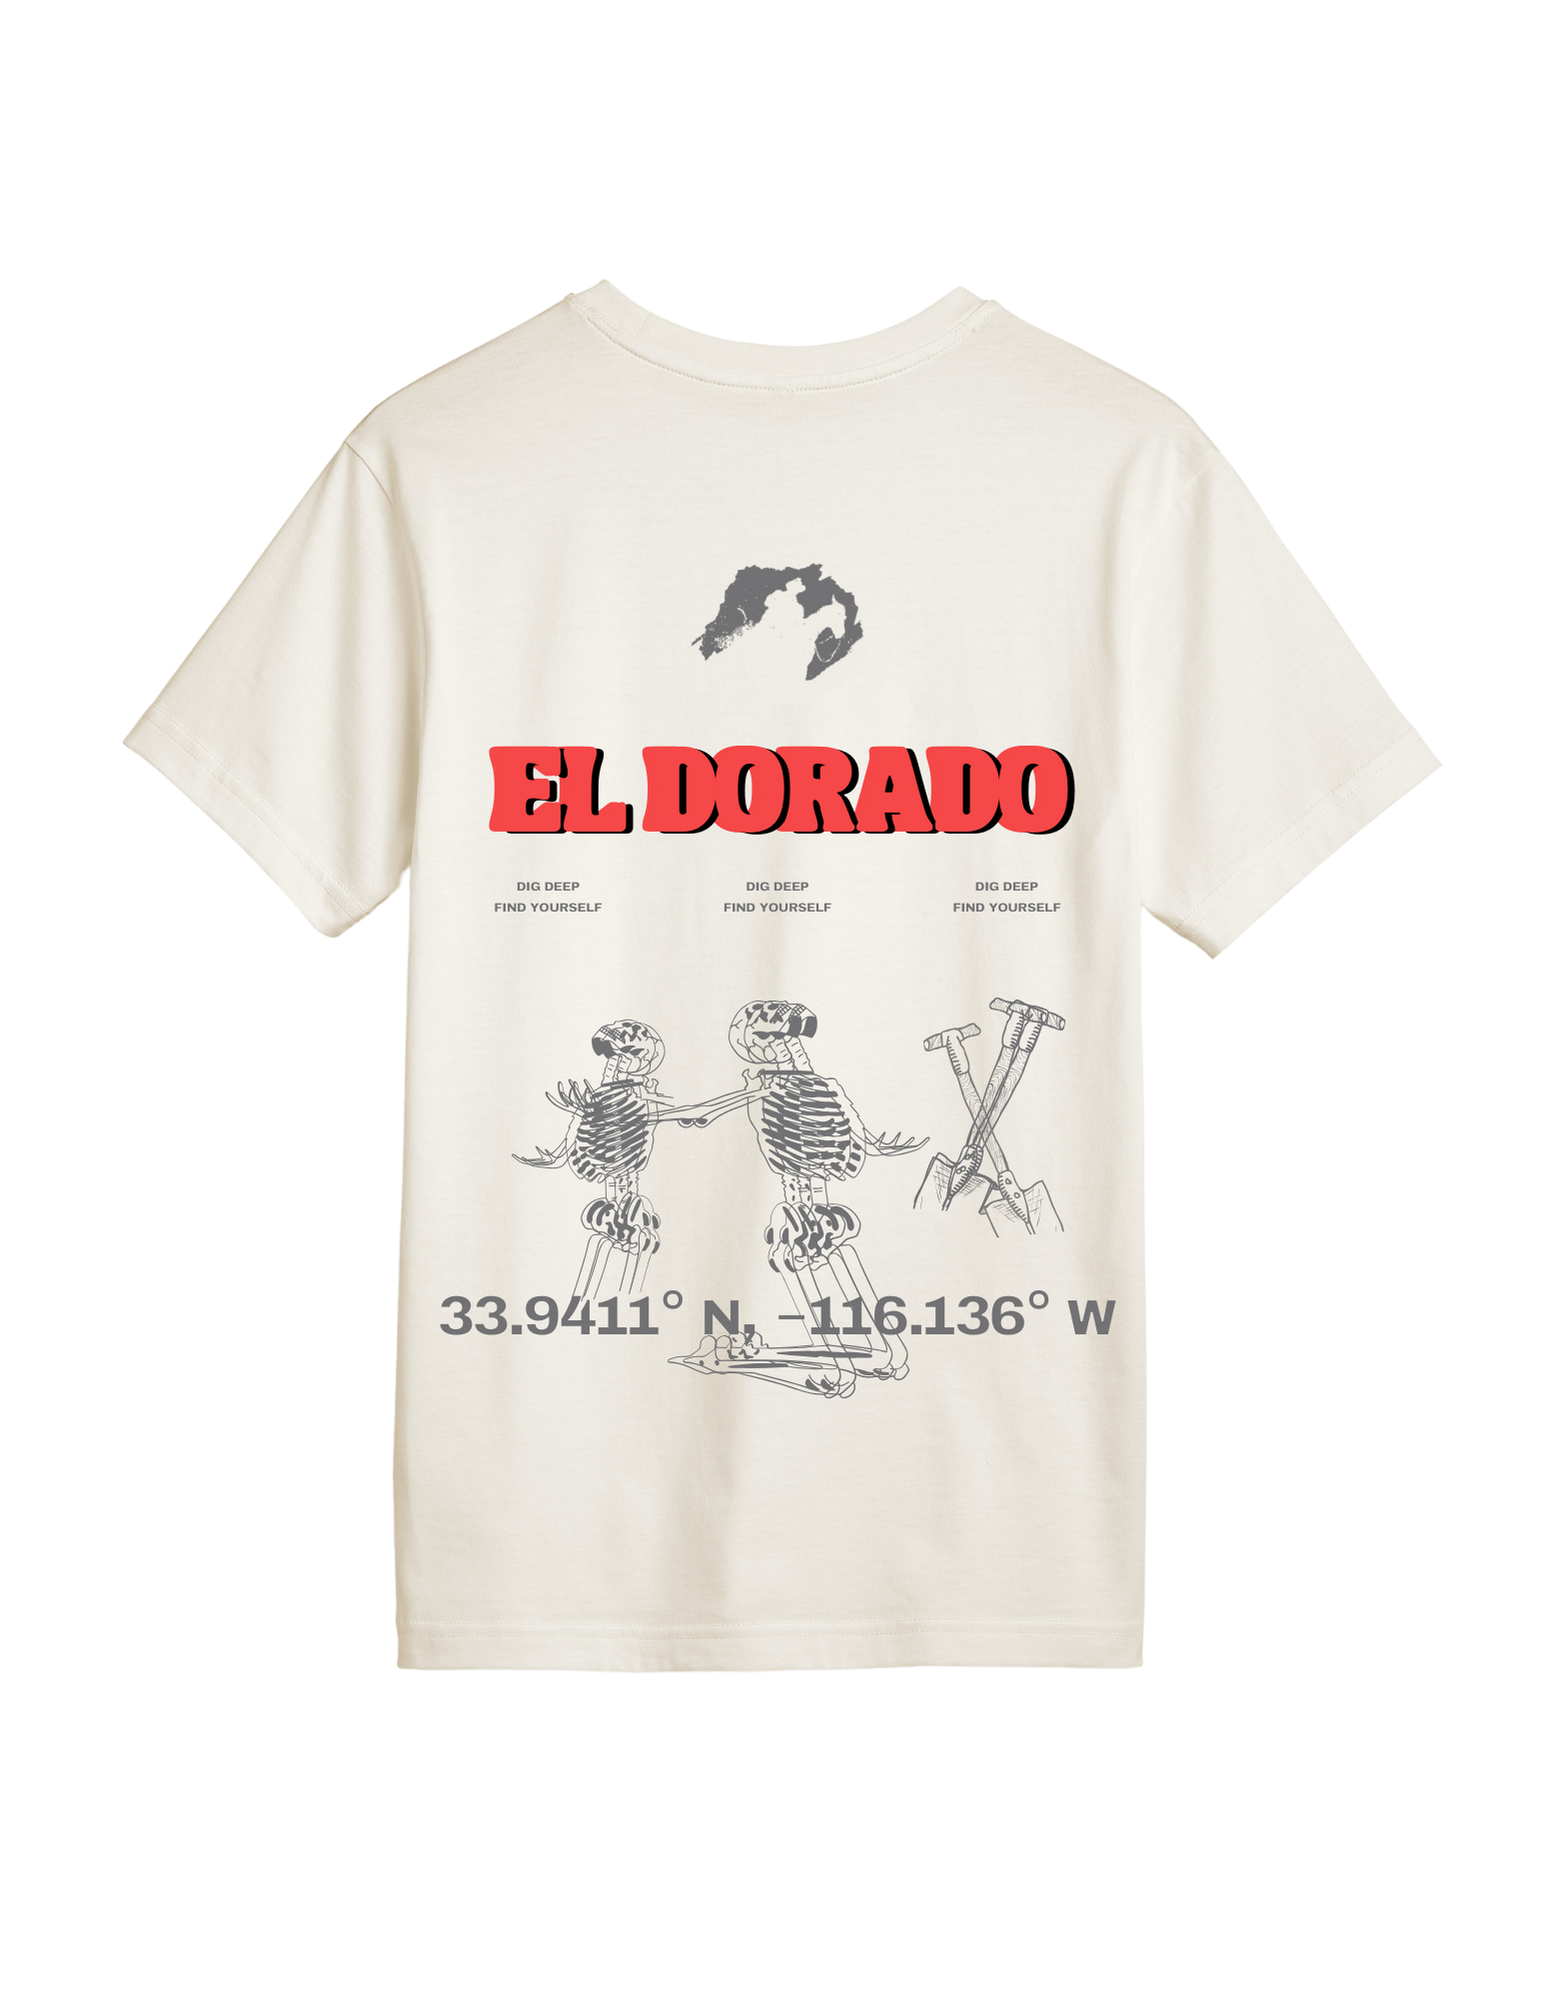 El Dorado in Beige by Blurry Recreation